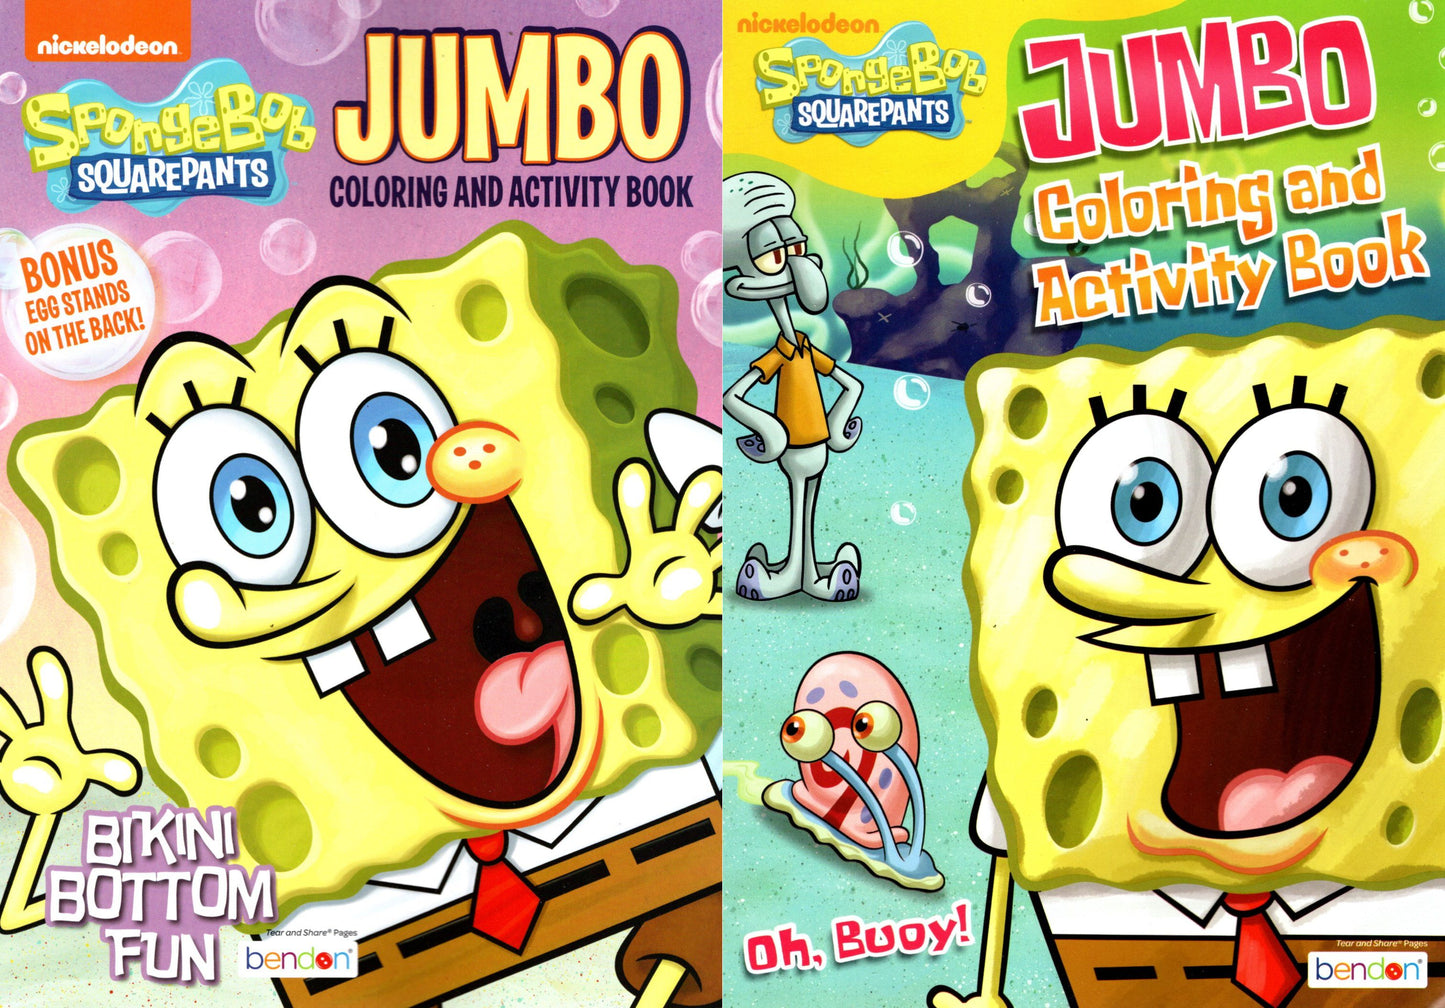 SpongeBob - Bikini Bottom Fun & Oh Buoy! - Jumbo Coloring & Activity Book